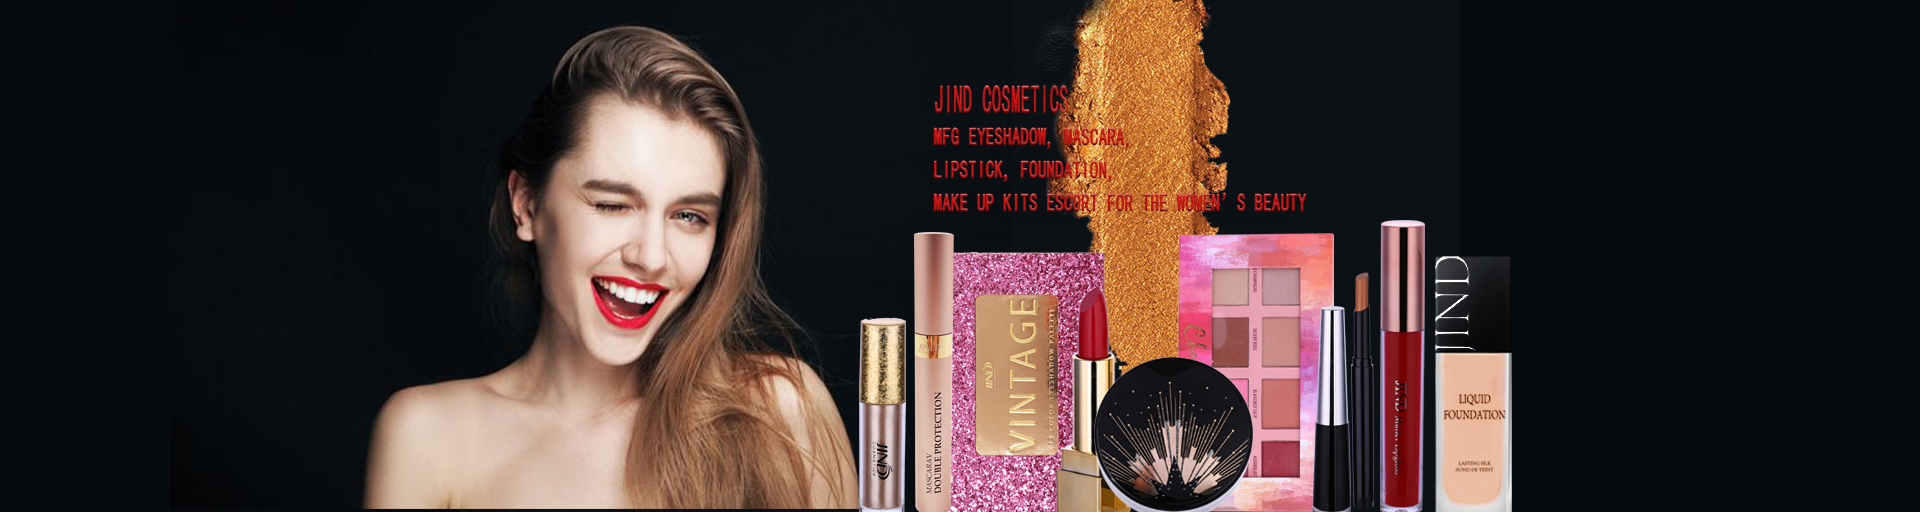 JIND Cosmetics MFG Eyeshadow, Mascara, Lipstick